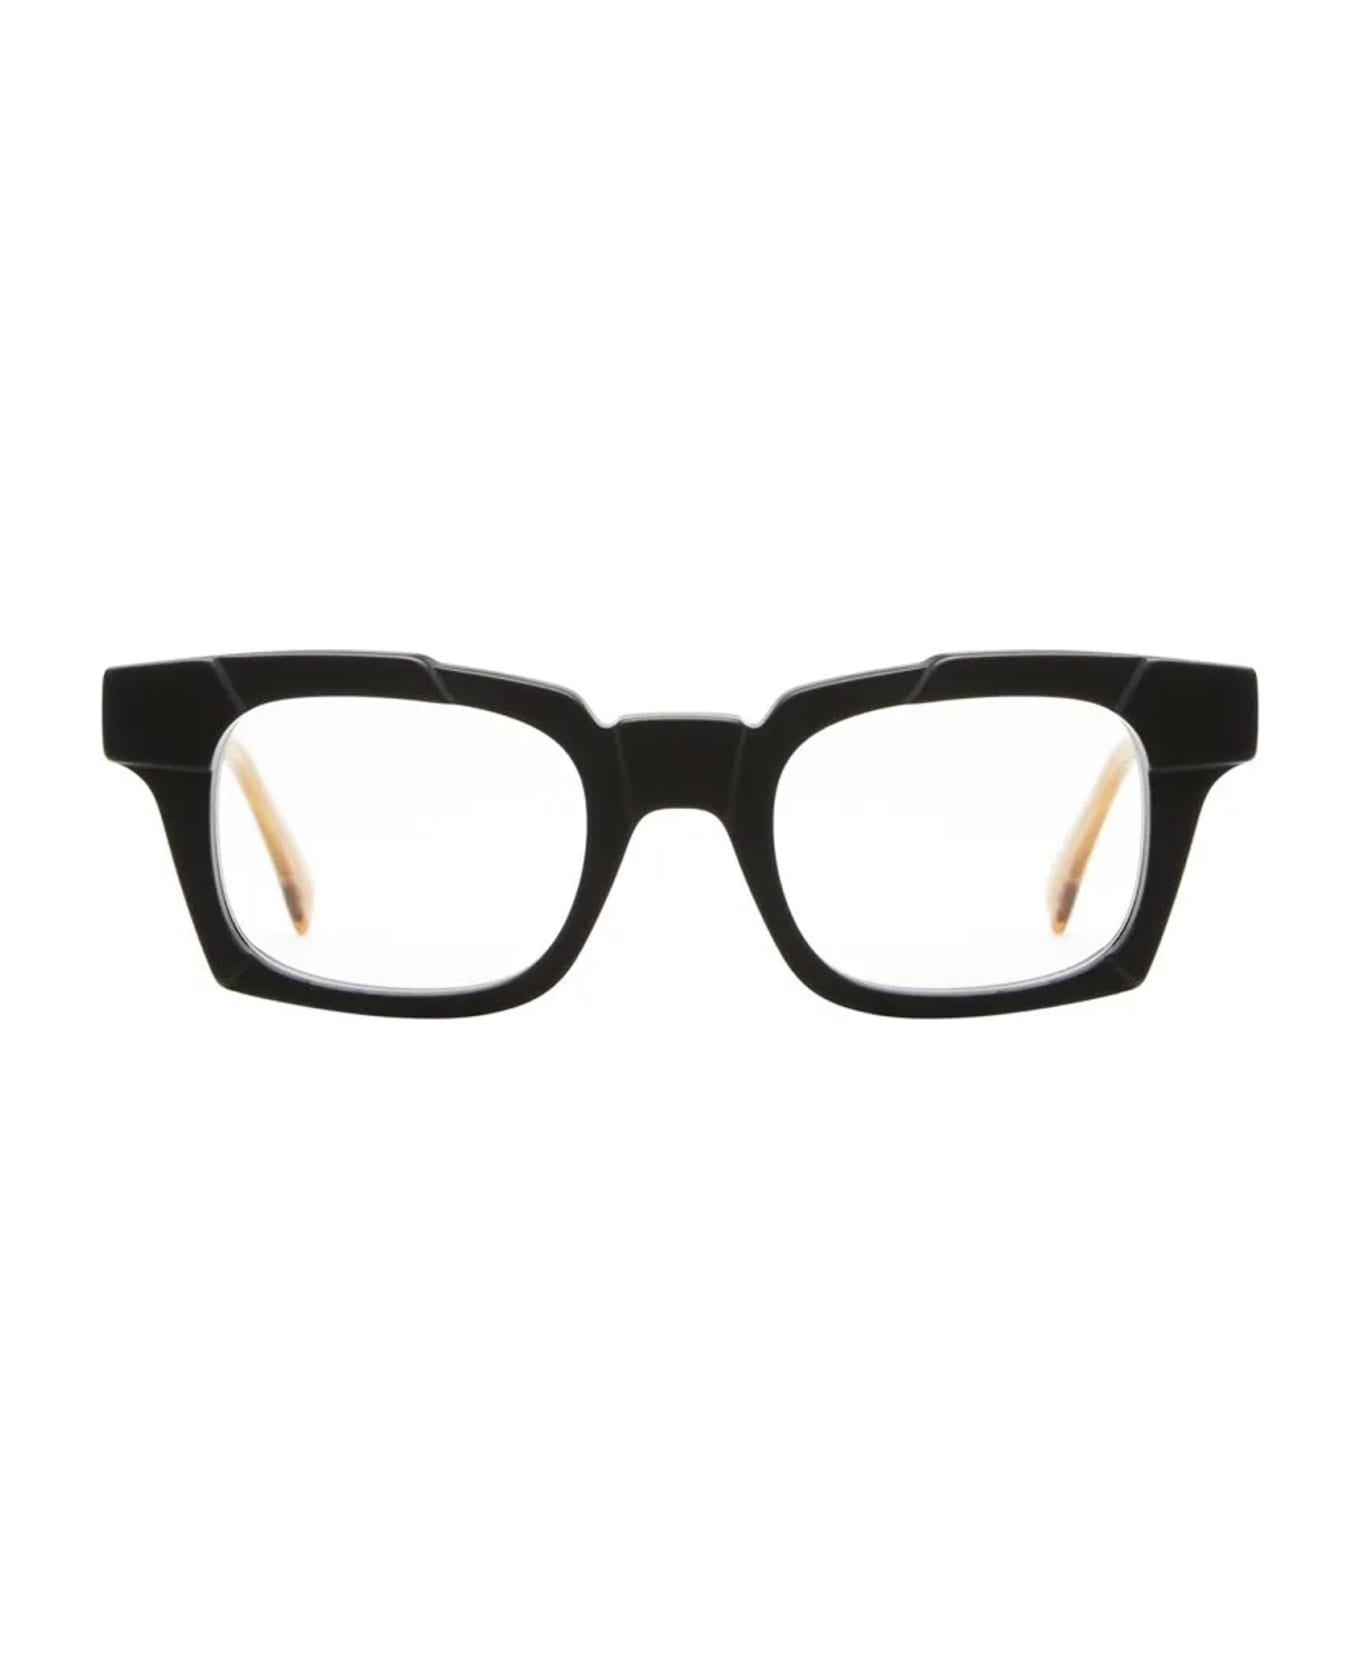 Kuboraum Mask S3 - Black Matt Glasses - matte black/transparentcamel